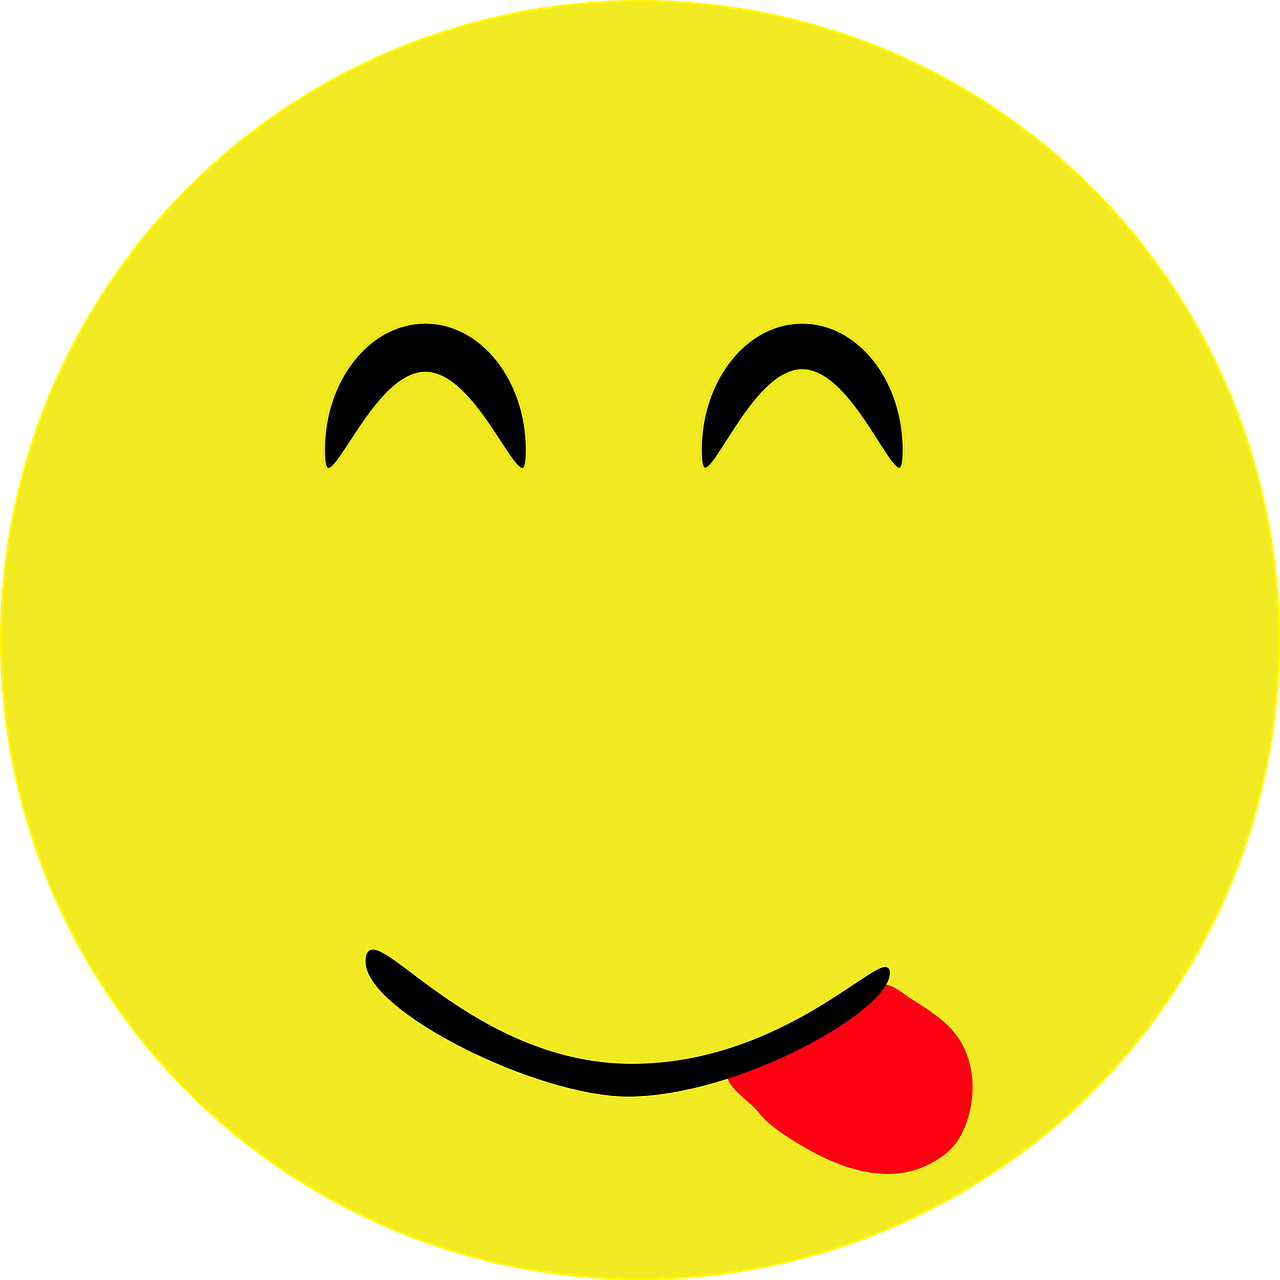 yummy smiley emoji free photo